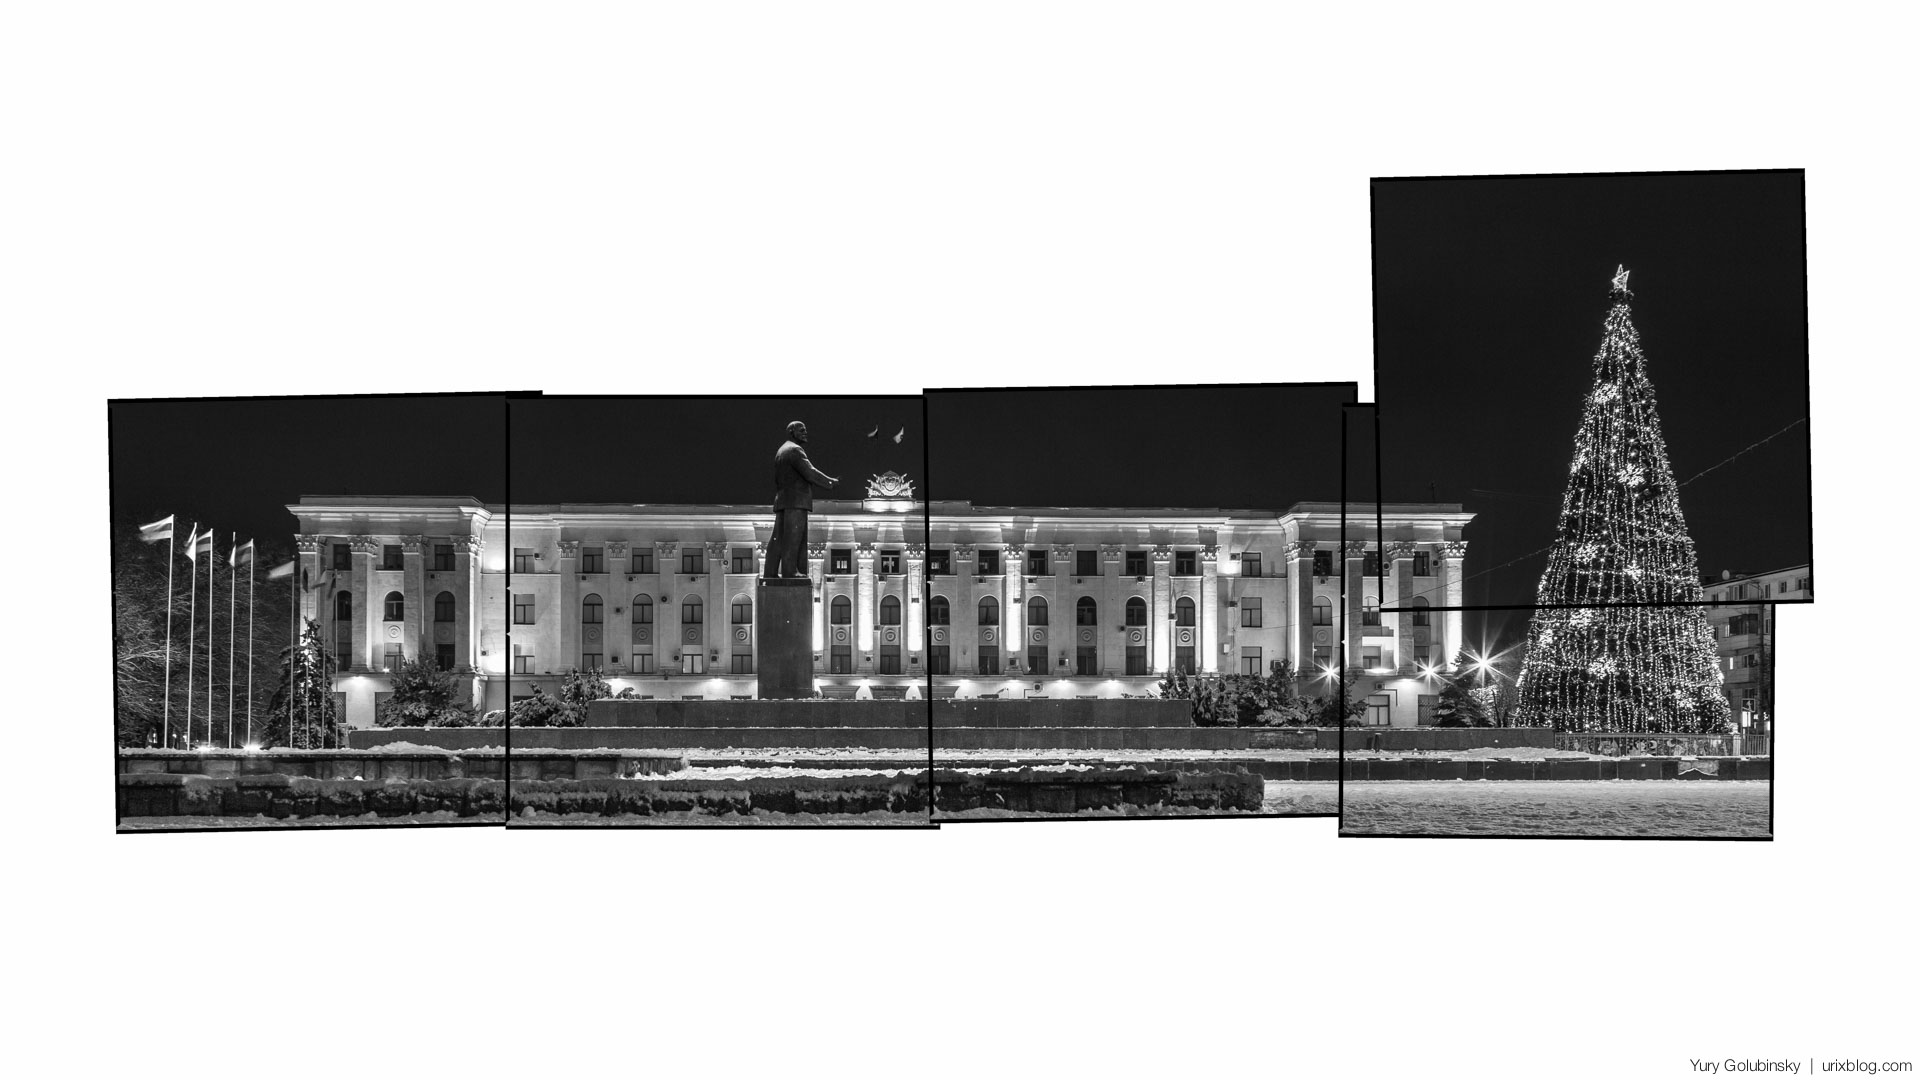 night, Simferopol', Lenin, square, New year tree, flags, parliament building, Crimea, Russia, winter, january, snow, panorama, BW, black and white, 2015